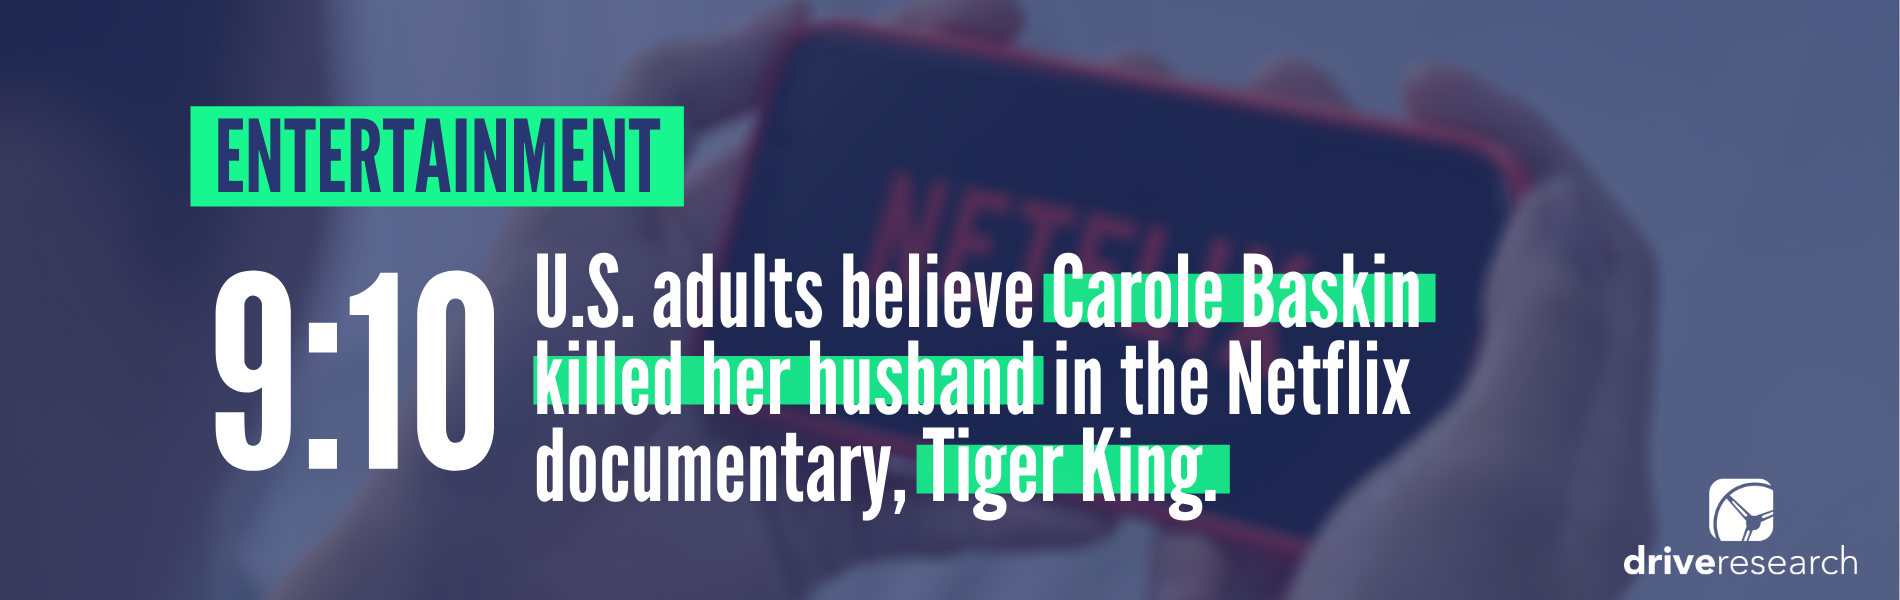 quarantine survey_9 in 10 U.S. adults believe Carole Baskin killed her husband in the Netflix documentary, Tiger King.